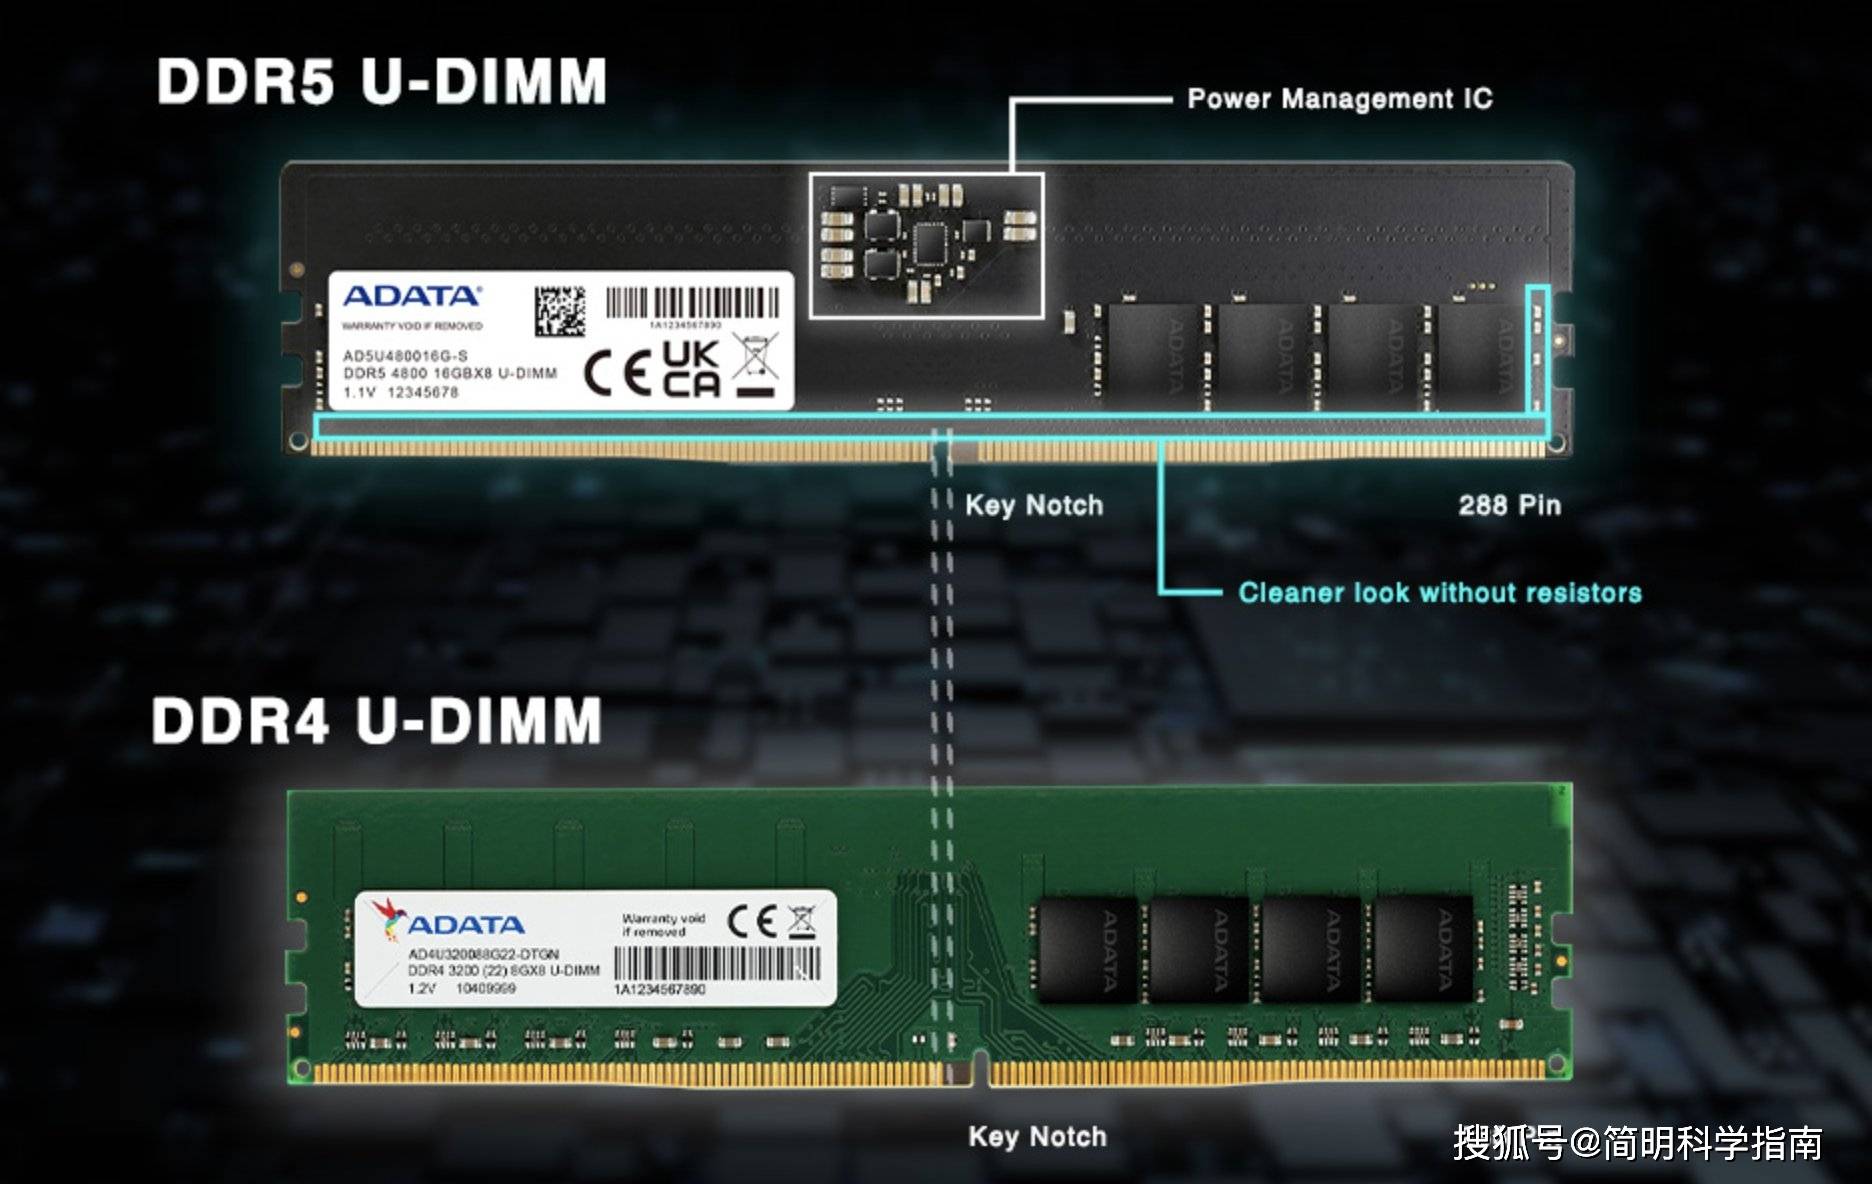 ddr3l ddr4通用 DDR3L与DDR4内存：性能特点、优势与局限性全解析，专业购买建议一网打尽  第9张